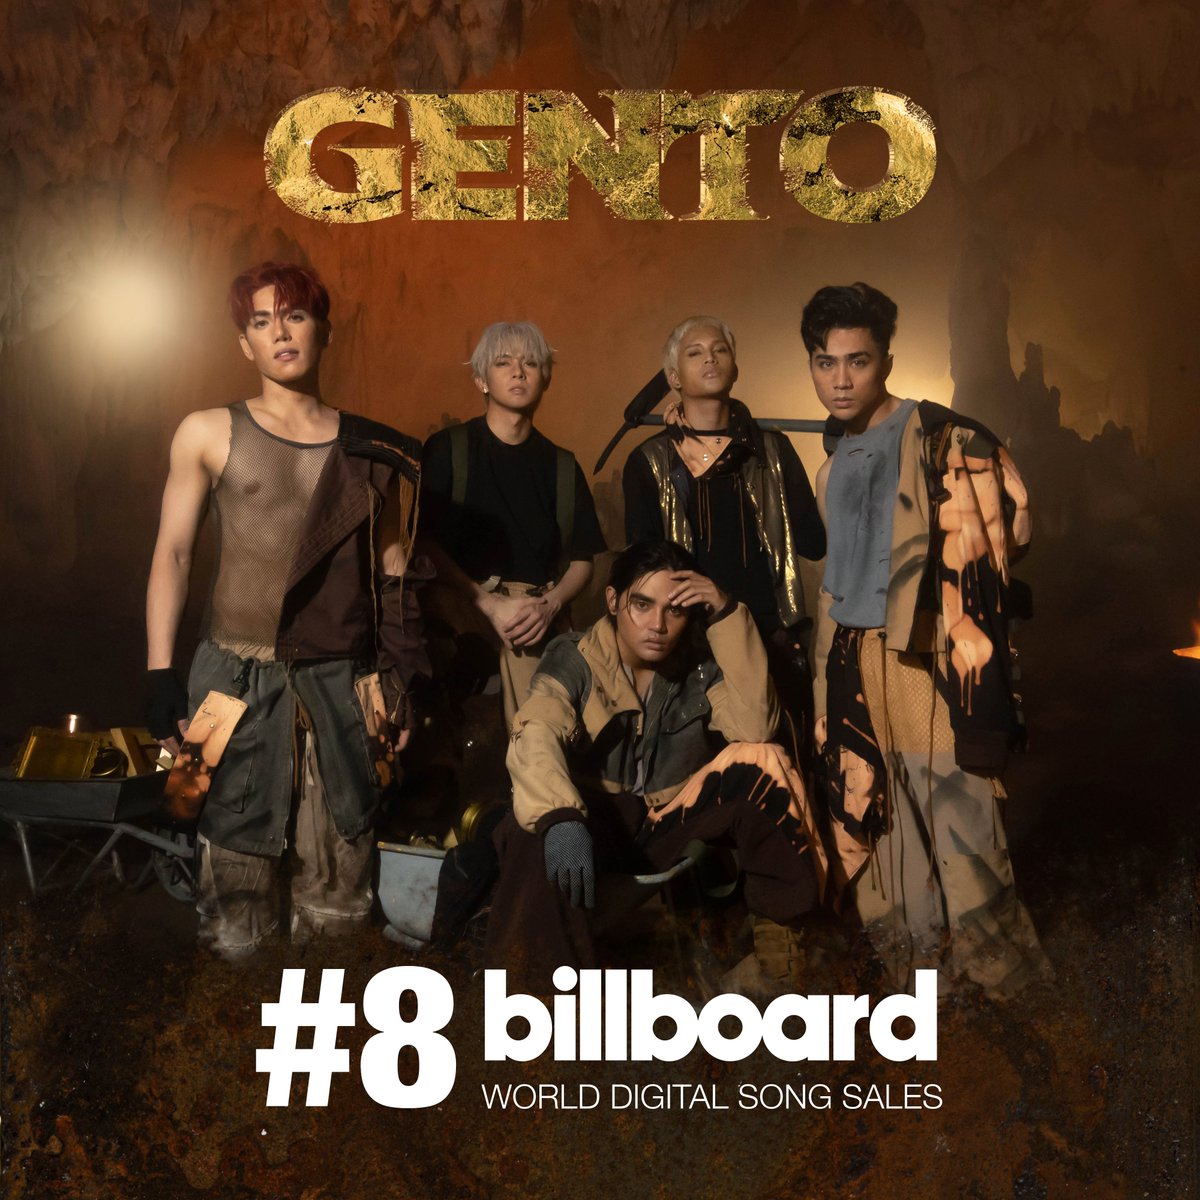 ⚠️ SB19 'GENTO'
#8 on Billboard World Digital Song Sales

A'TIN! You keep taking us to heights unimaginable. What you are is truly AMAZING.

#SB19 #SB19onBillboardCharts
#SB19GENTO #GENTO